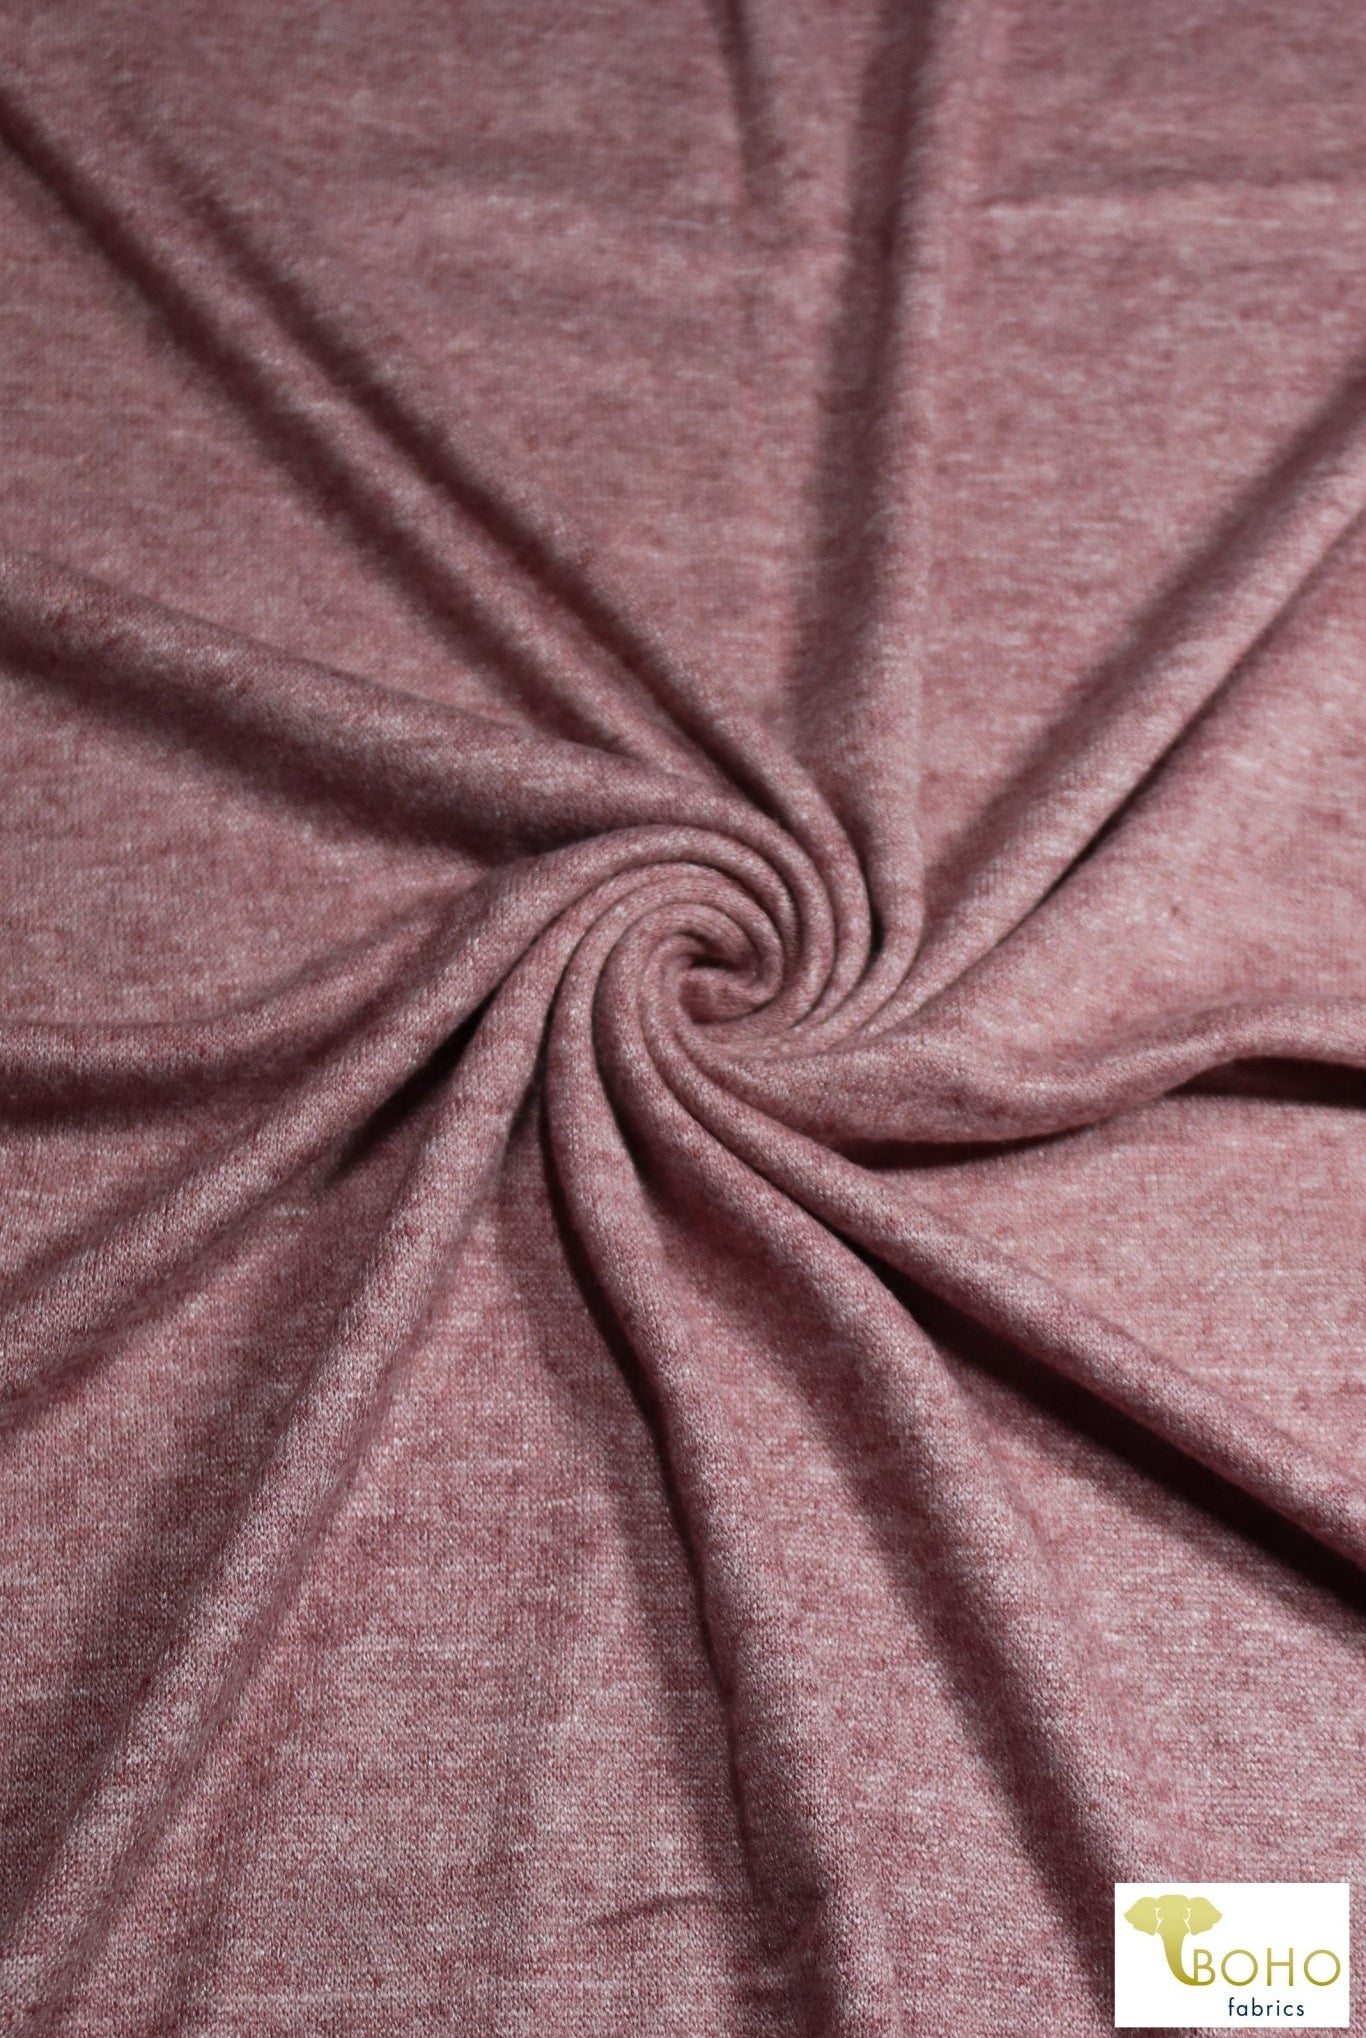 Quartz Pink. Brushed Sweater Knit. BSWTR-324 - Boho Fabrics